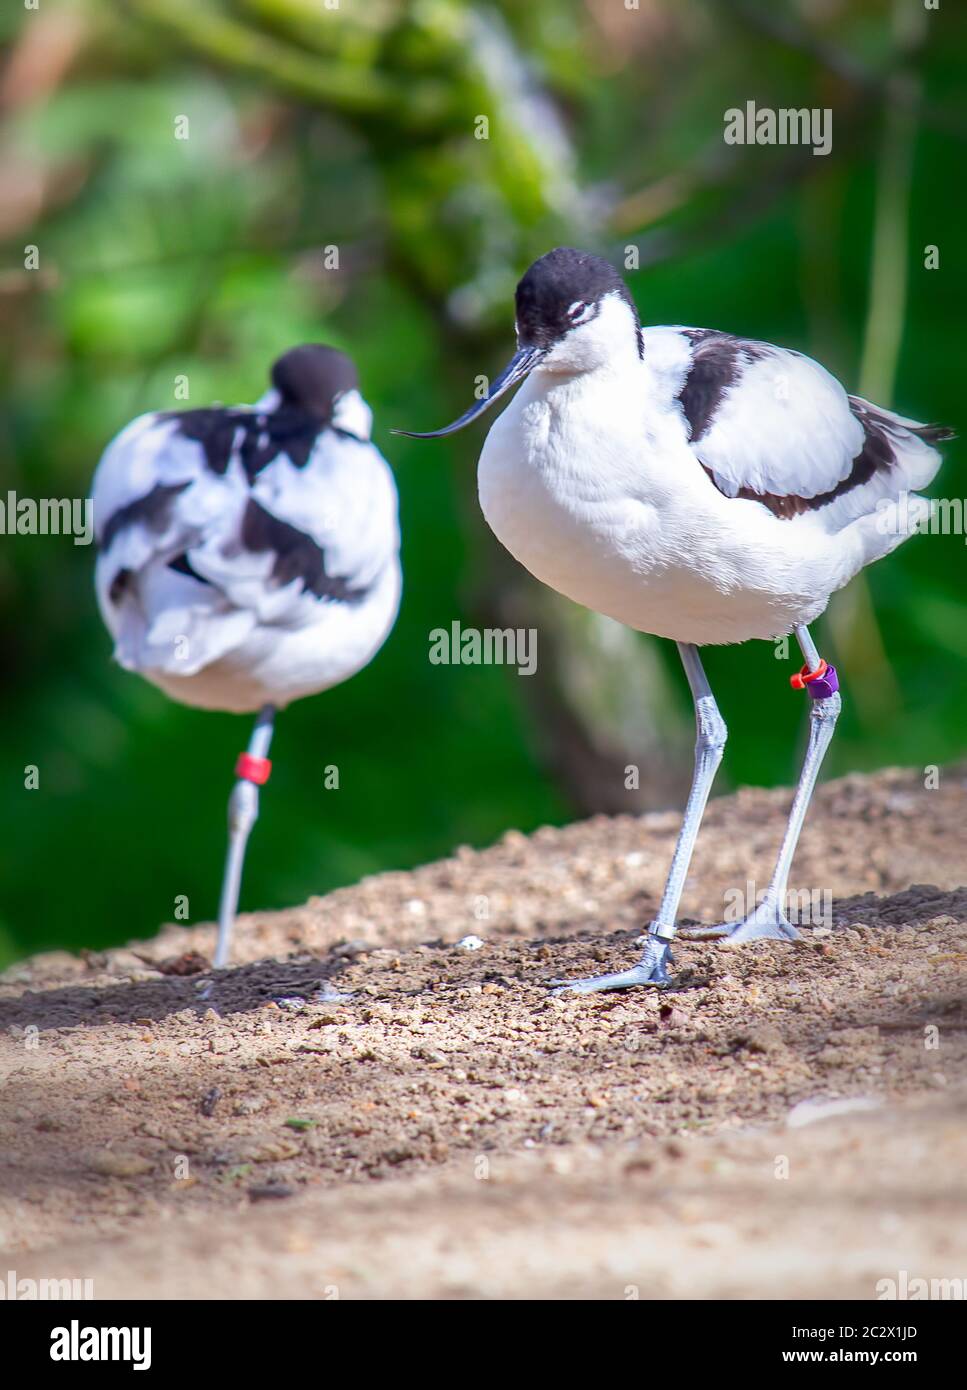 Pájaros con anillos fotografías e imágenes de alta resolución - Alamy